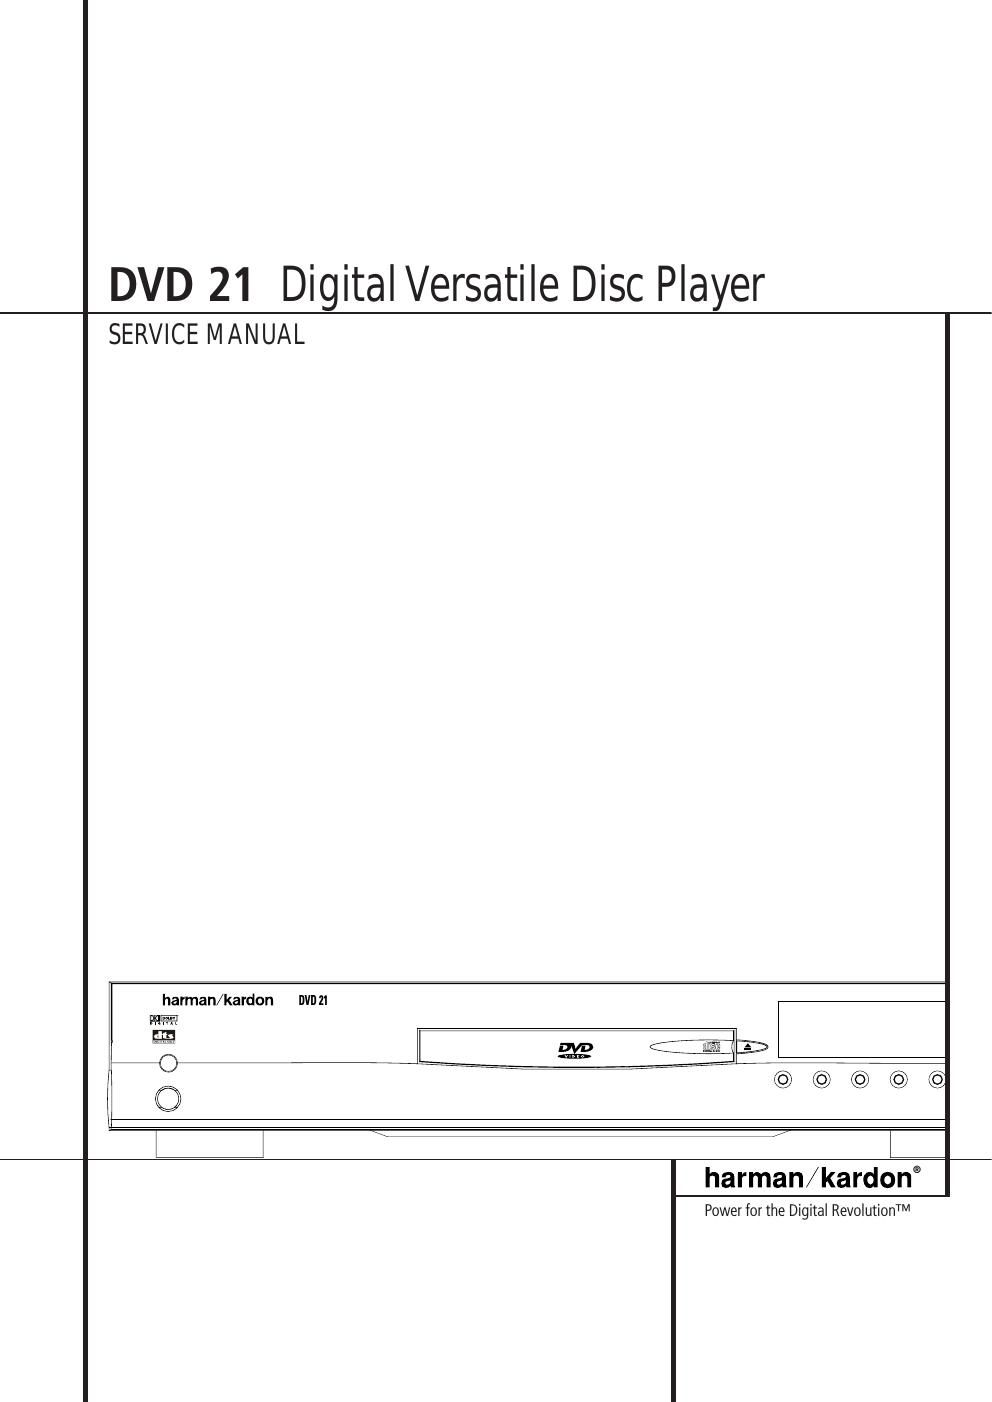 harman kardon dvd 21 service manual